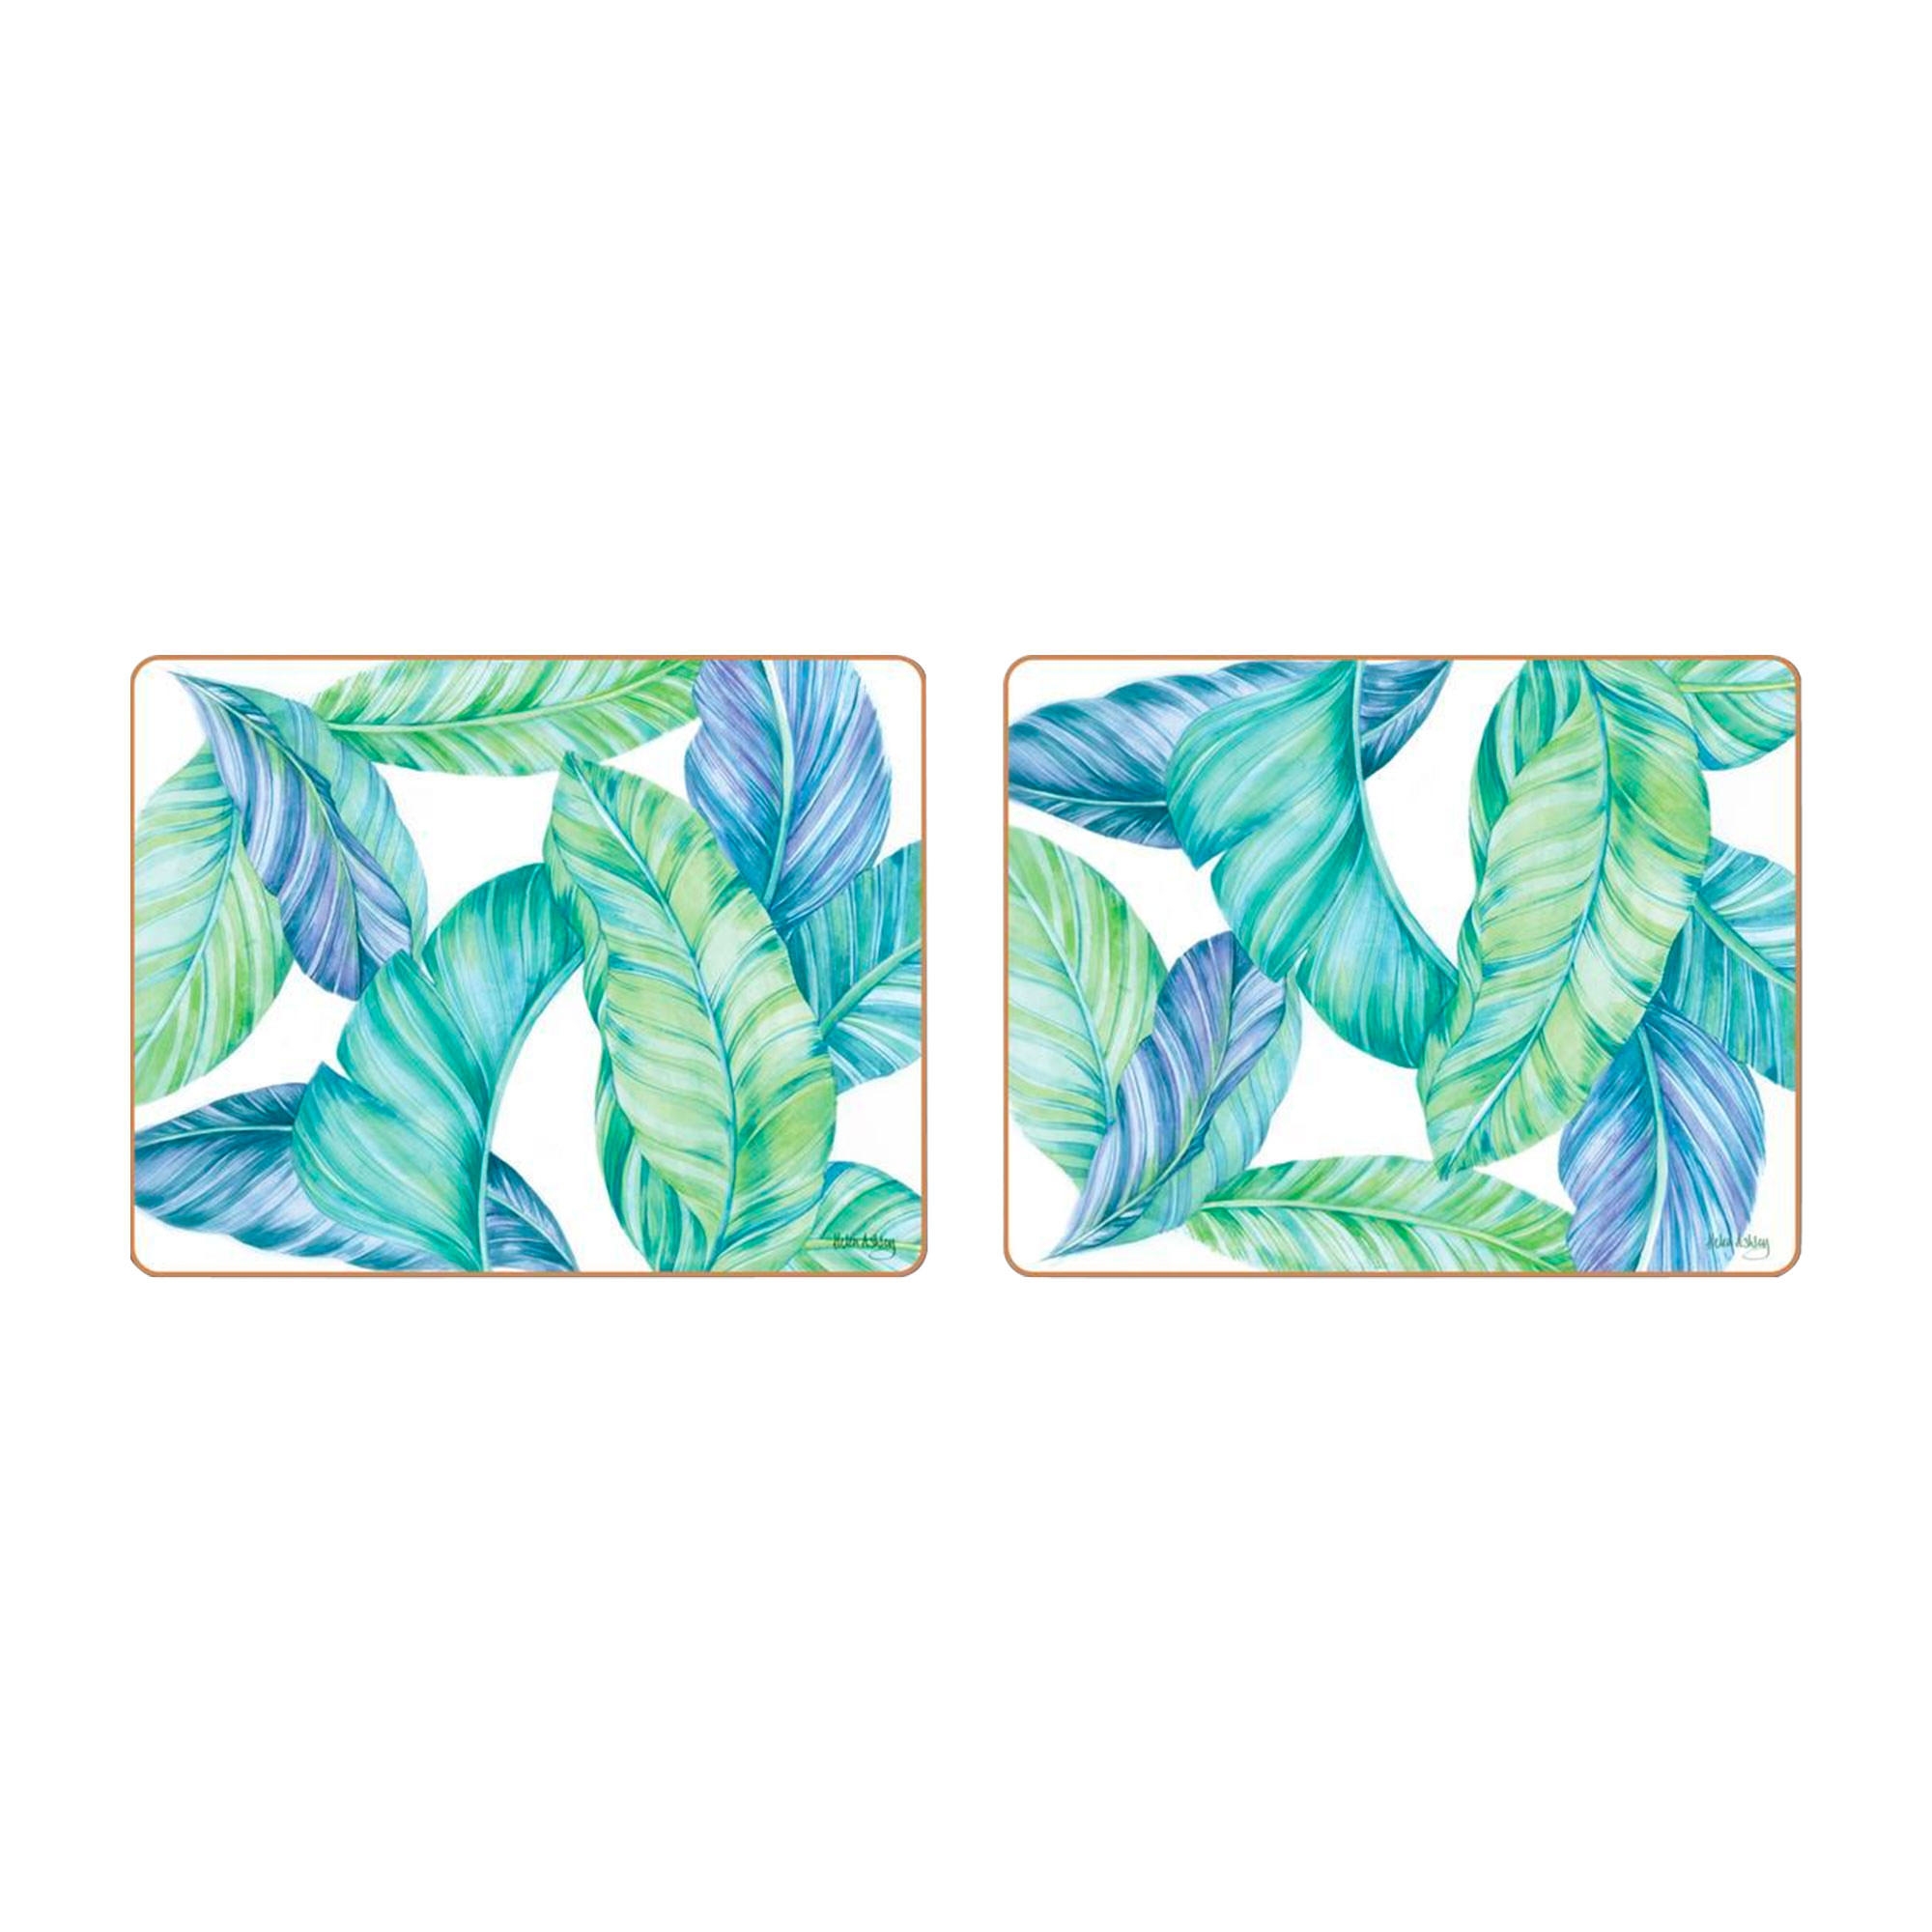 Cinnamon Rectangular Placemat Set of 6 Tropical Leaves Image 2